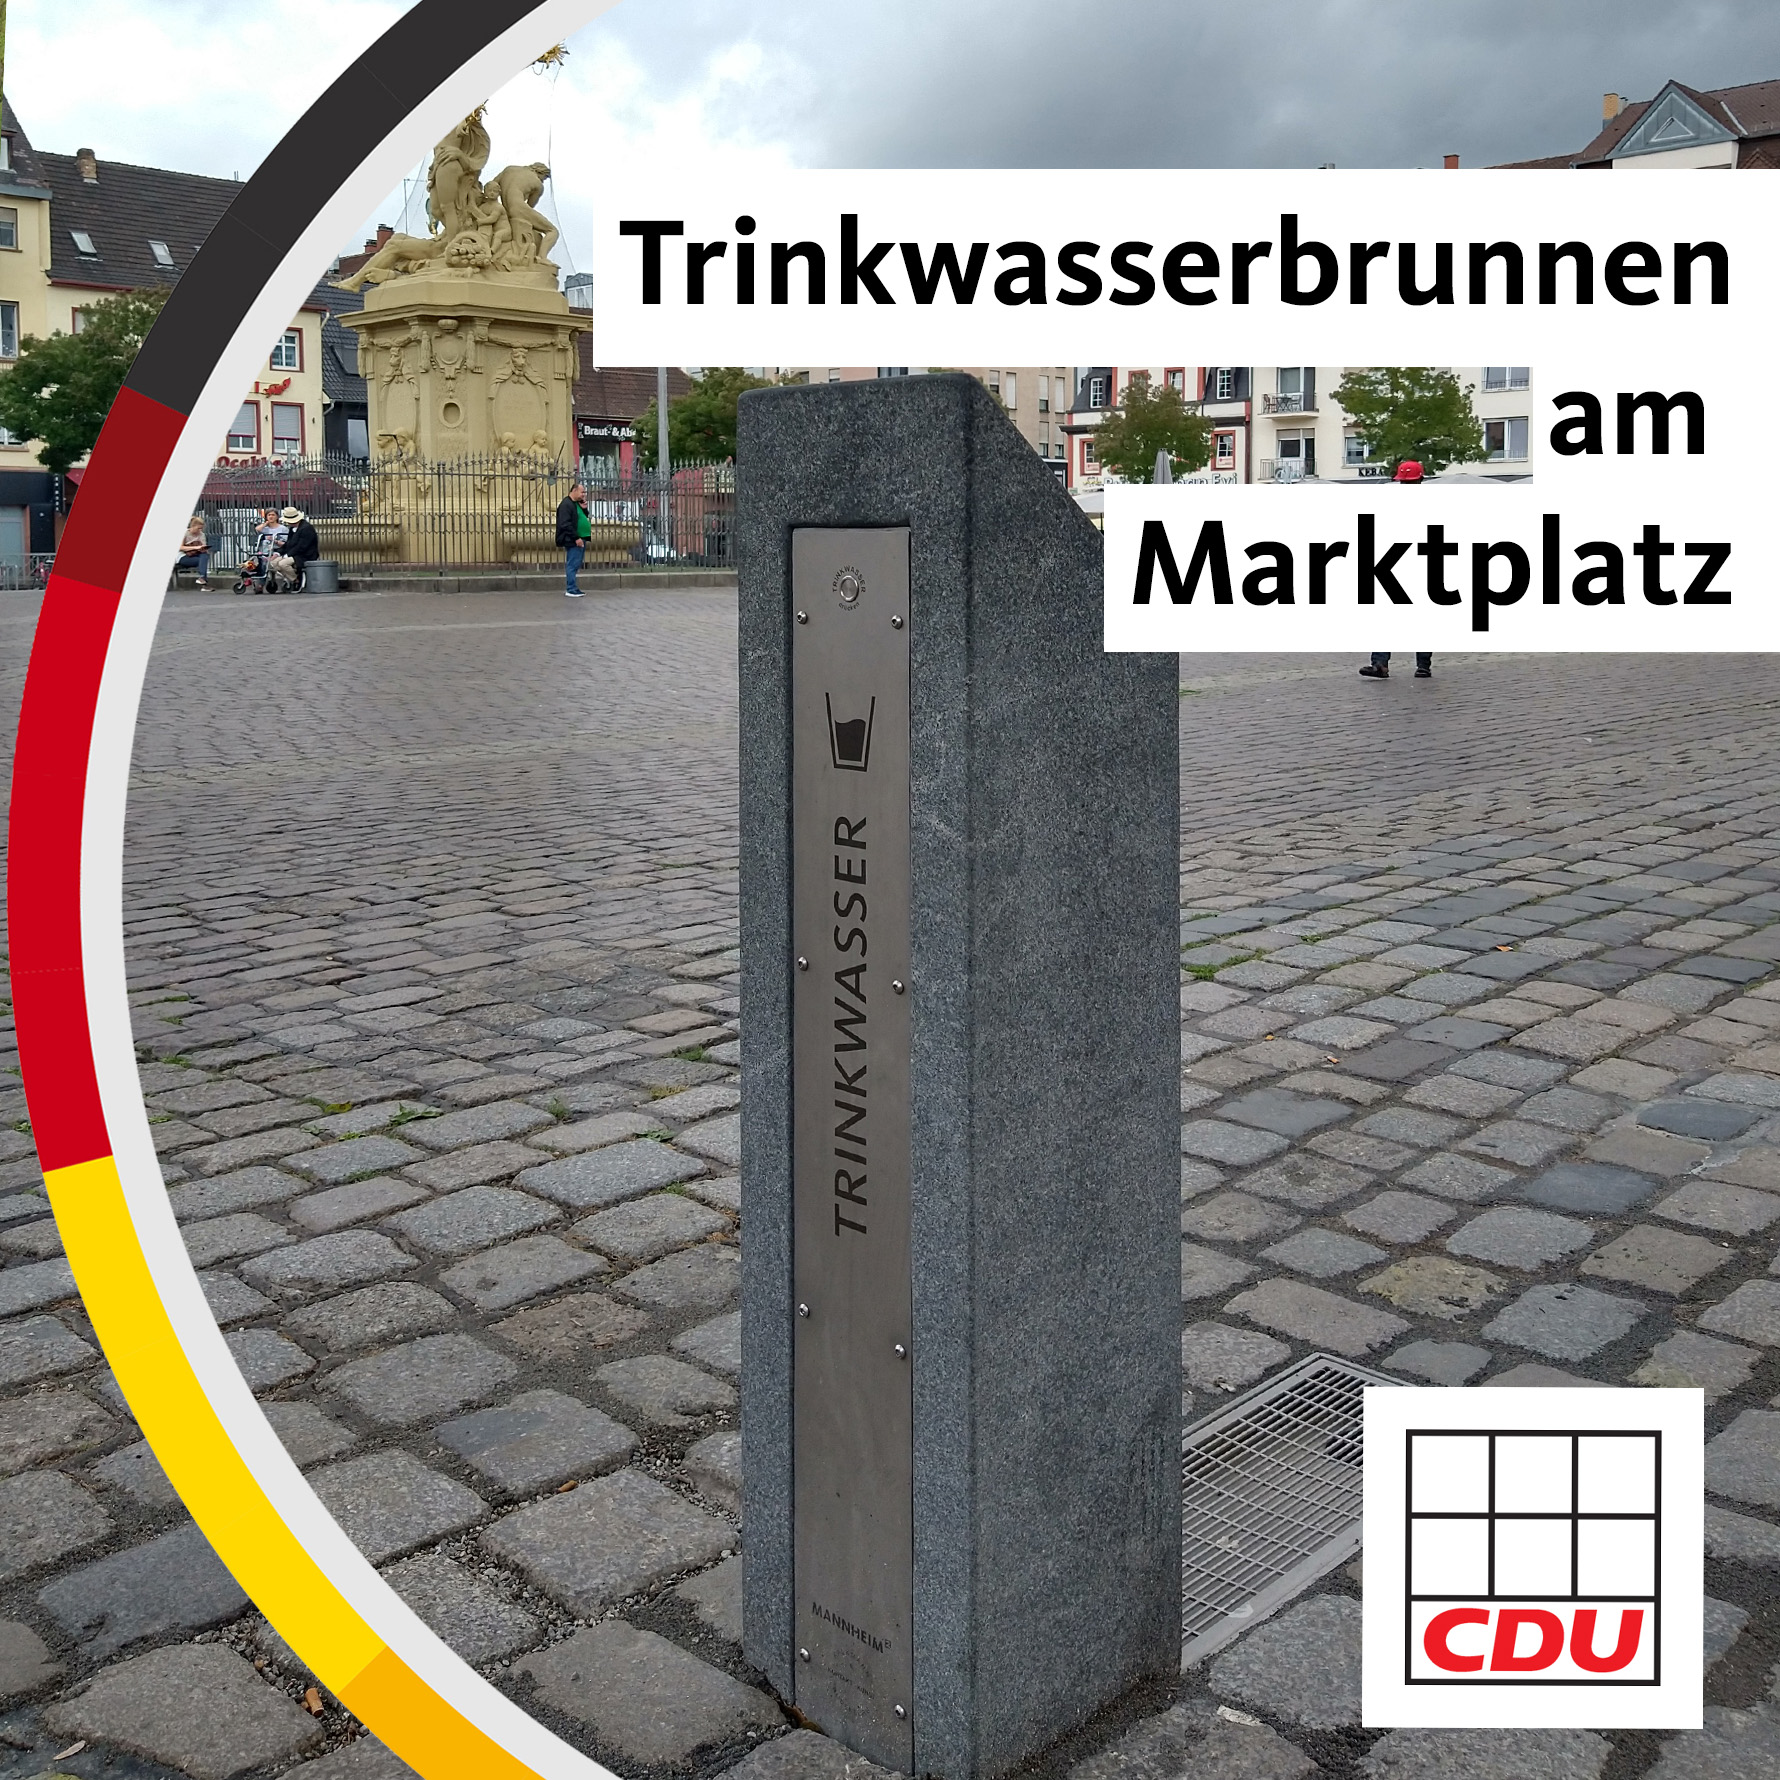 Read more about the article Trinkwasserbrunnen am Marktplatz.